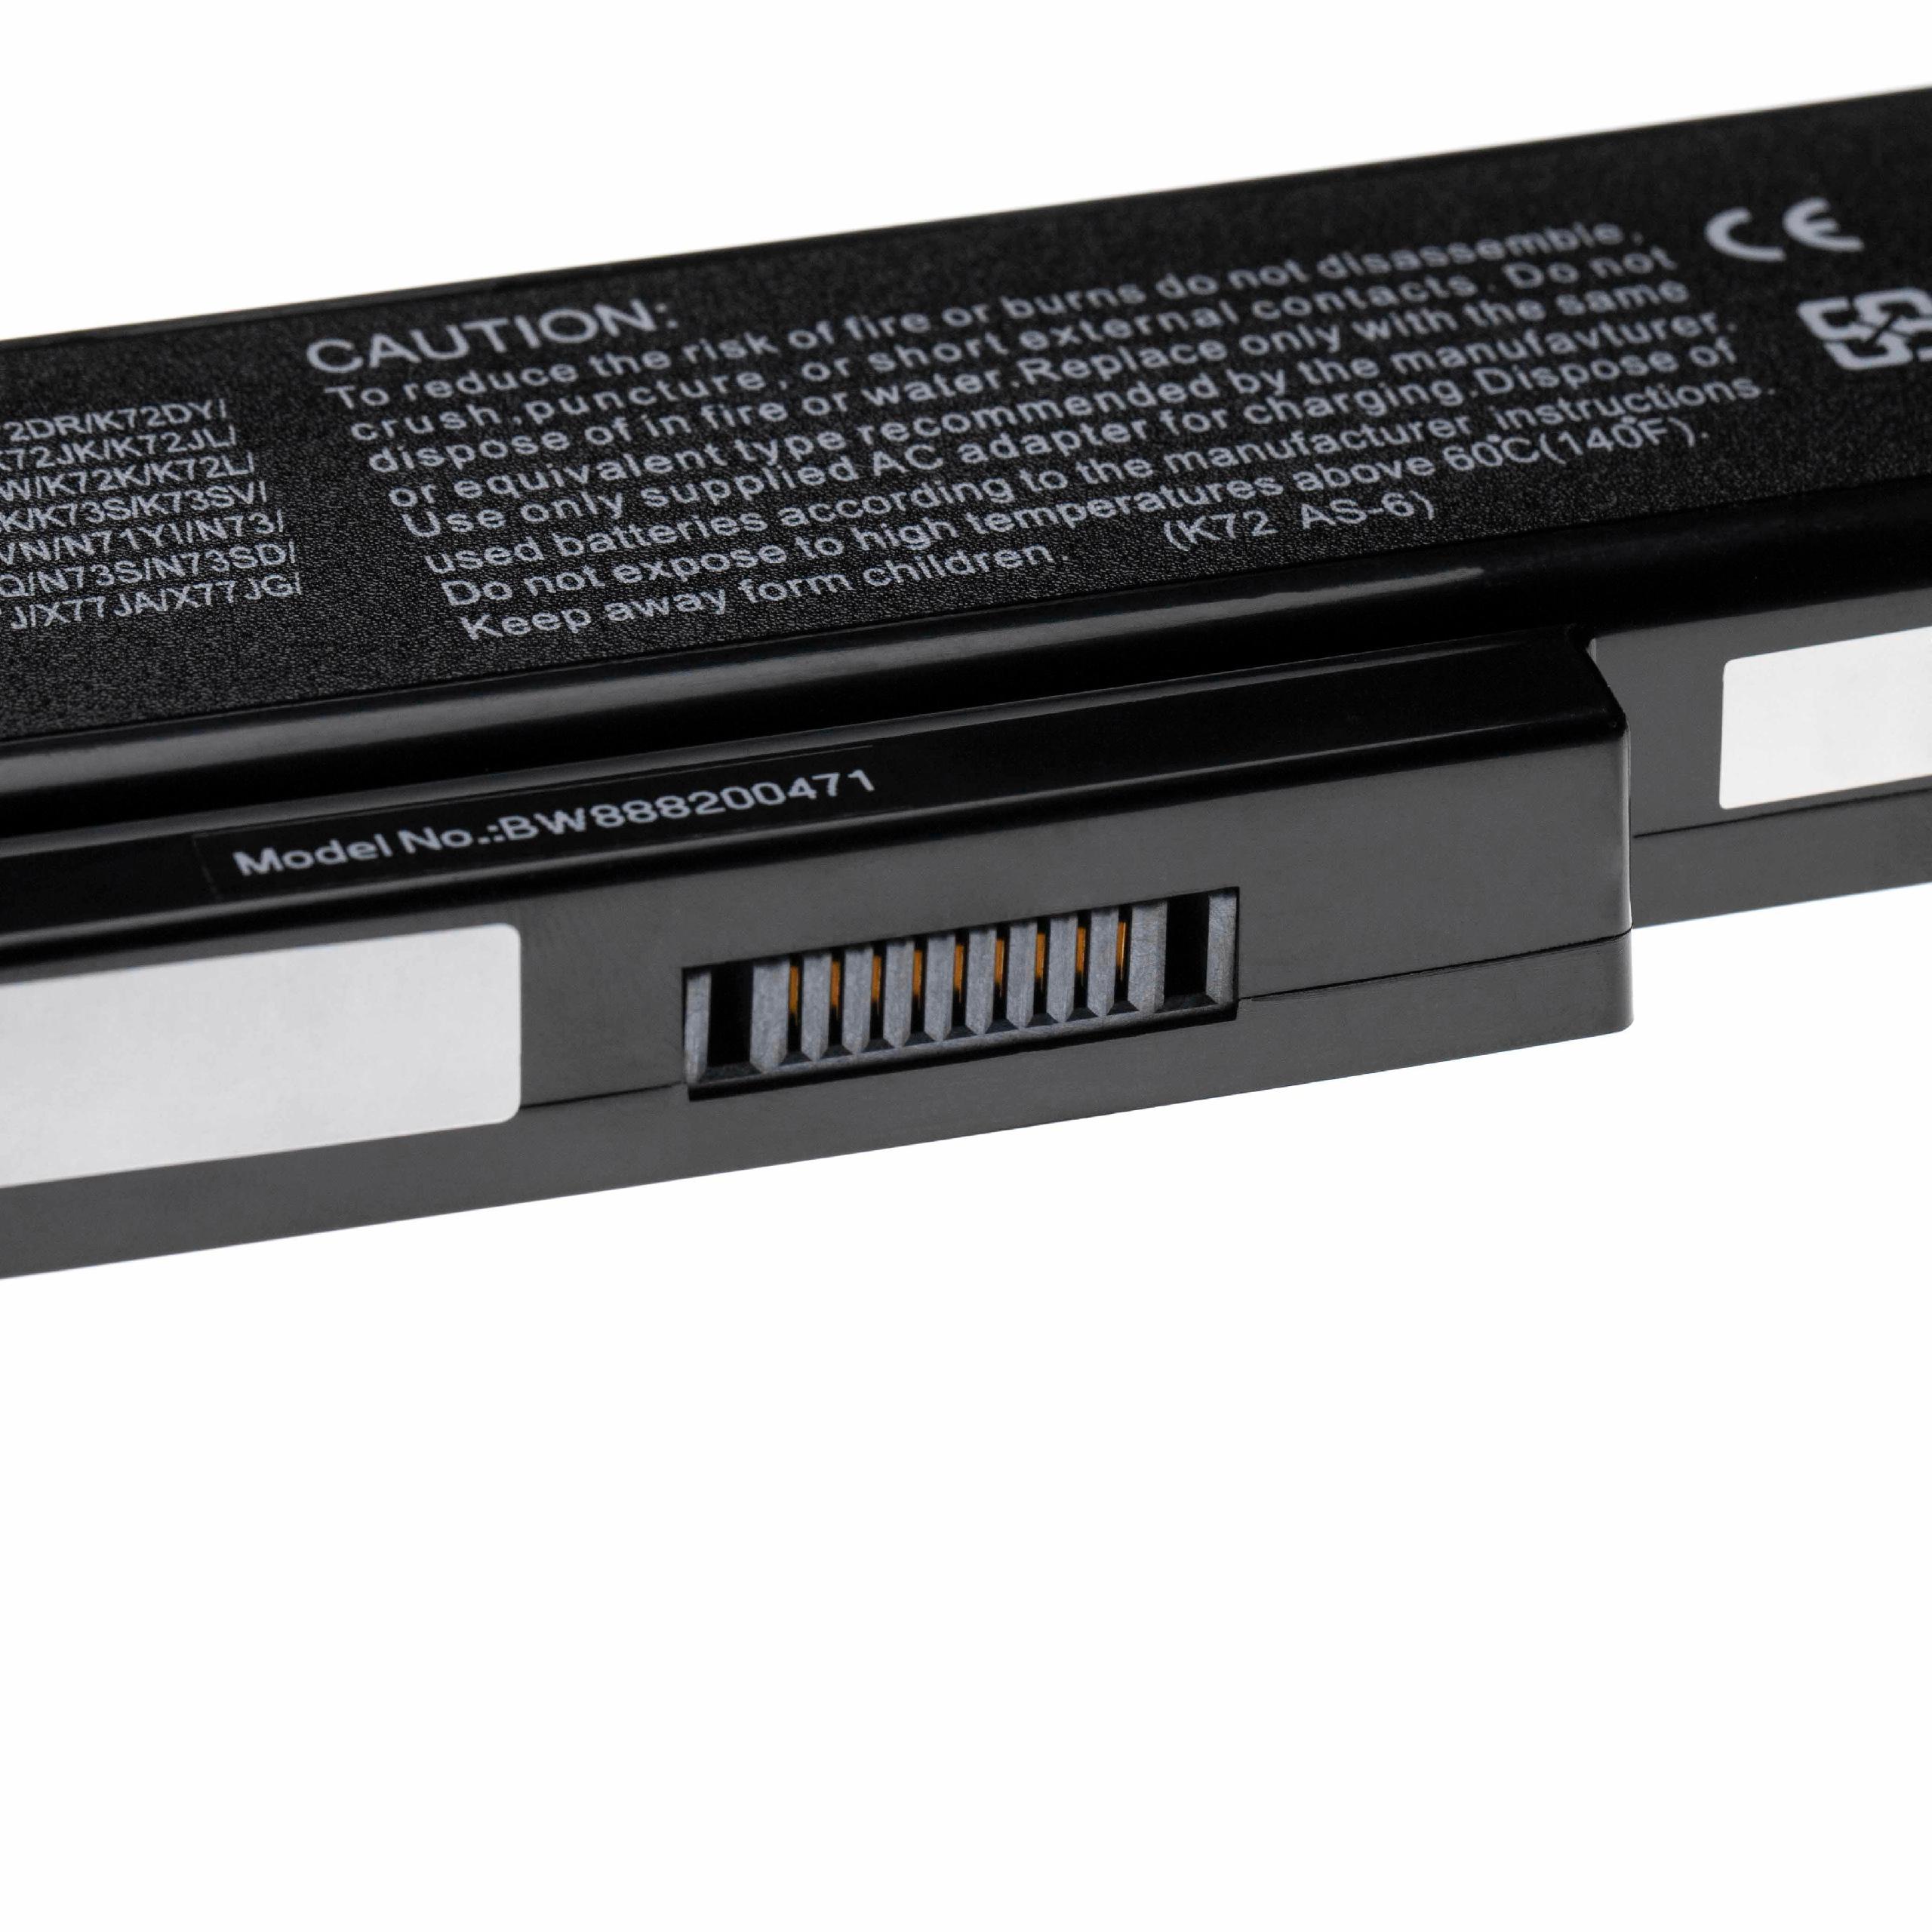 Akumulator do laptopa zamiennik Asus 70-NX01B1000Z, 70-NXH1B1000Z - 5200 mAh 10,8 V LiPo, czarny